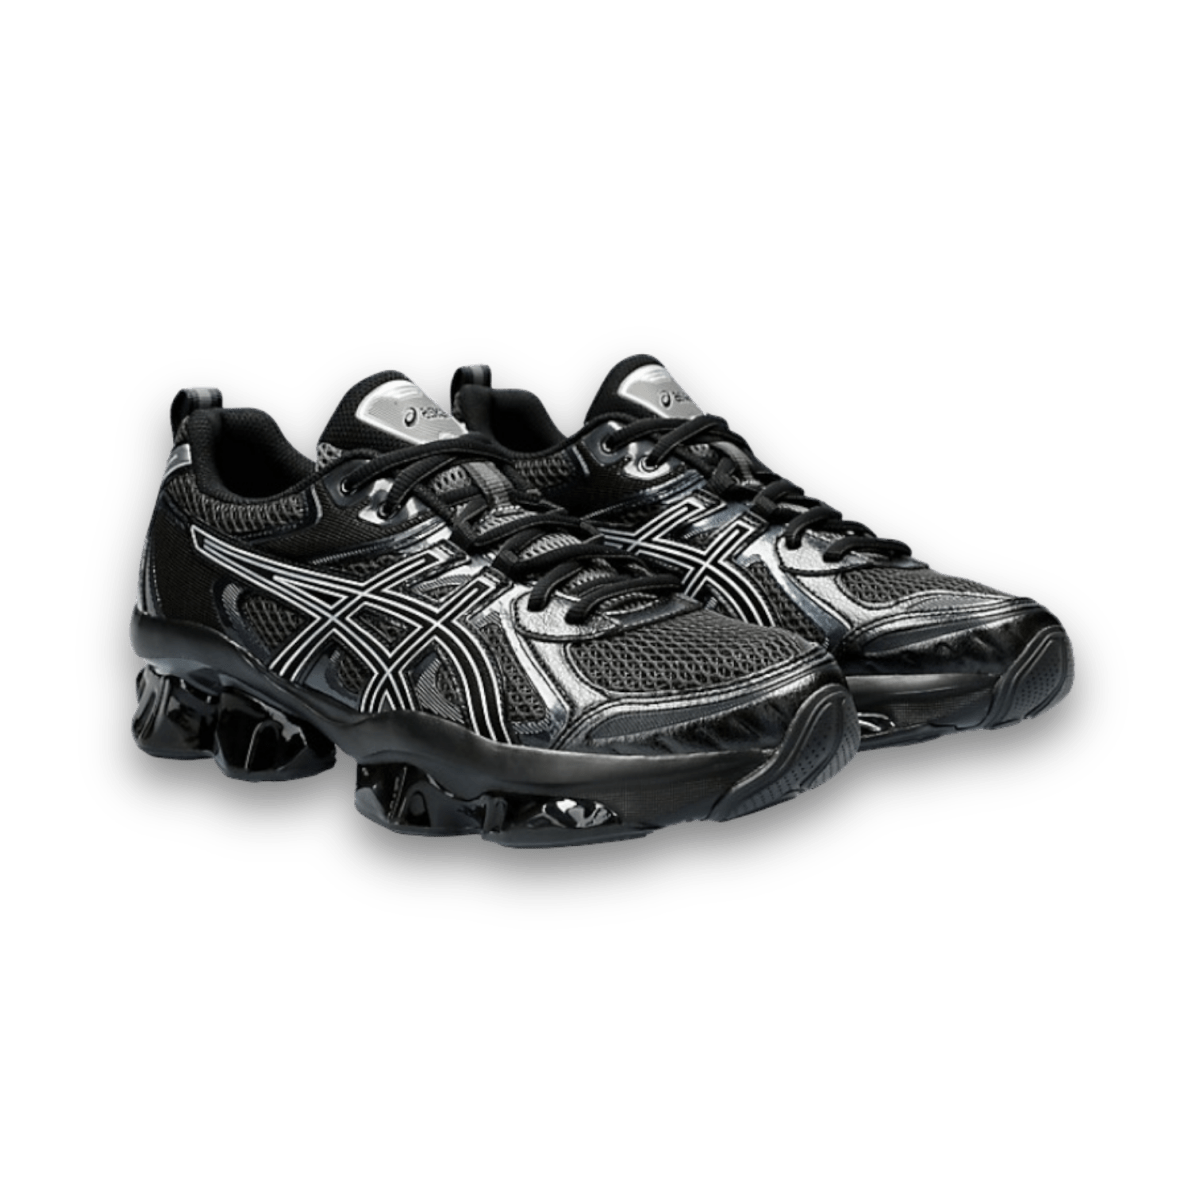 Asics Quantum Kinetic - Graphite Grey & Pure Black - Low Sneaker - Jawns on Fire Sneakers & Streetwear